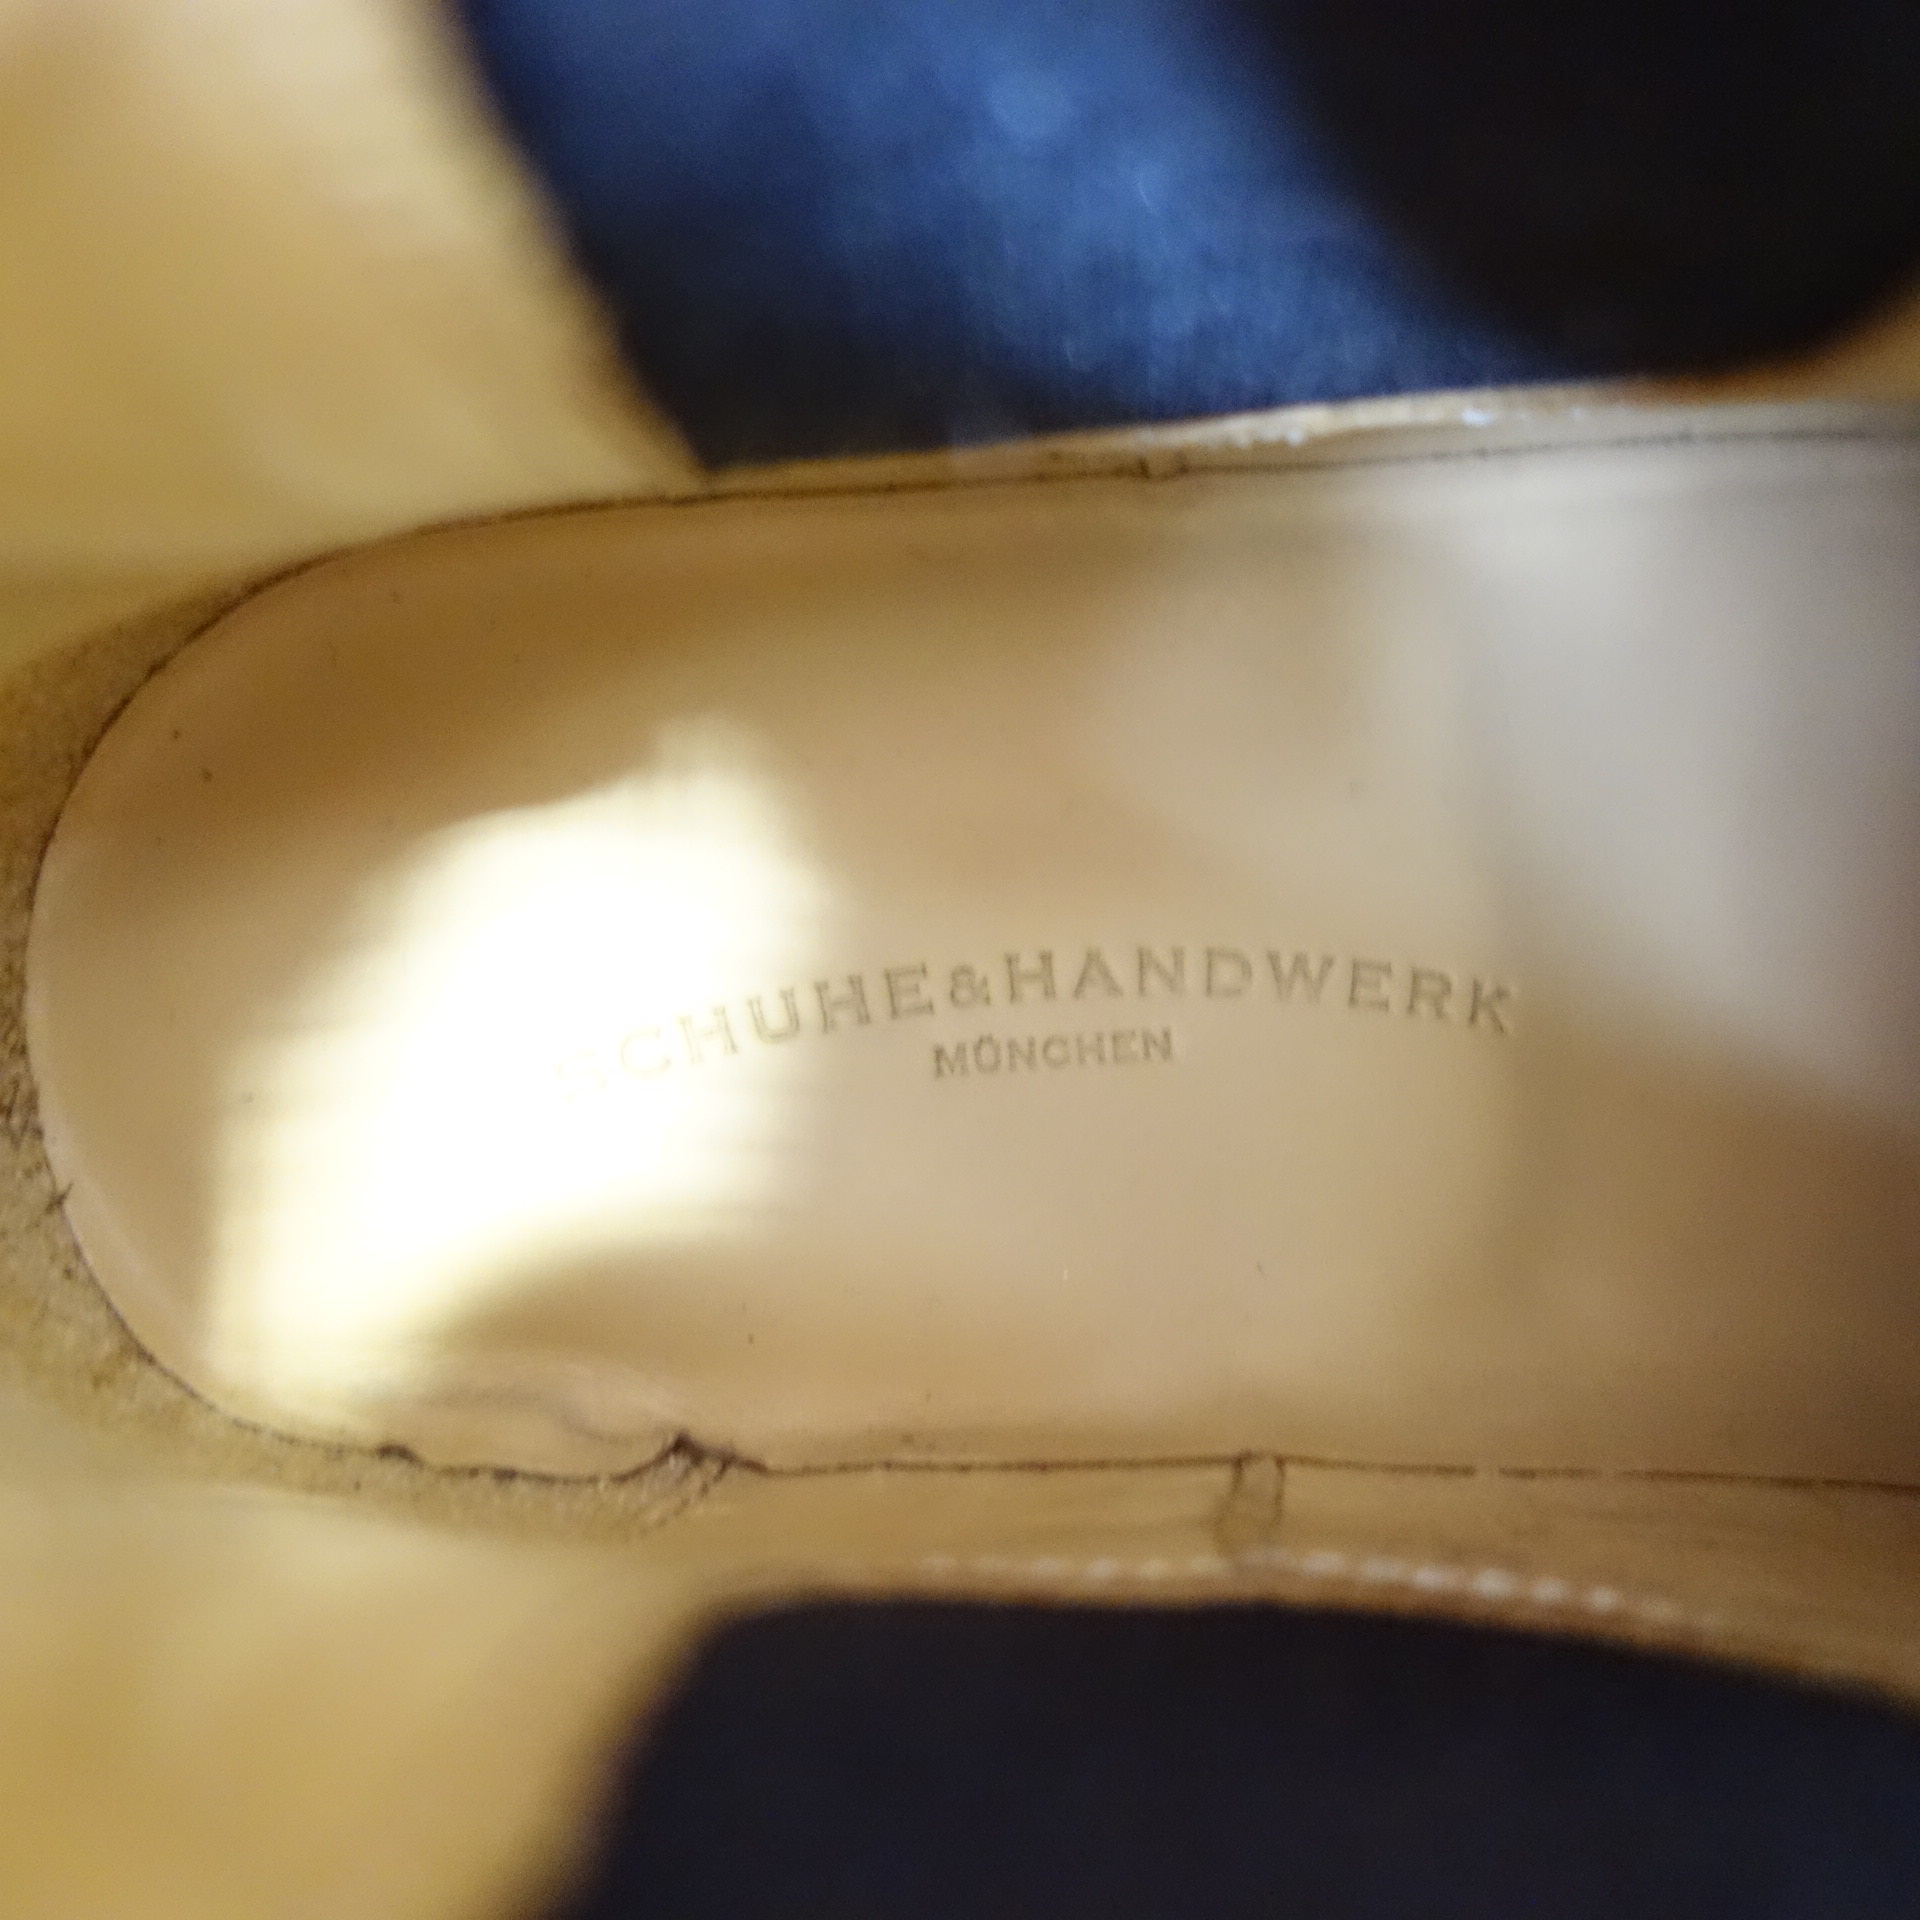 Damen Chelsea Boots SCHUHE & HANDWERK 38 ( 37 ) Leder Blau Stiefeletten Schuhe 